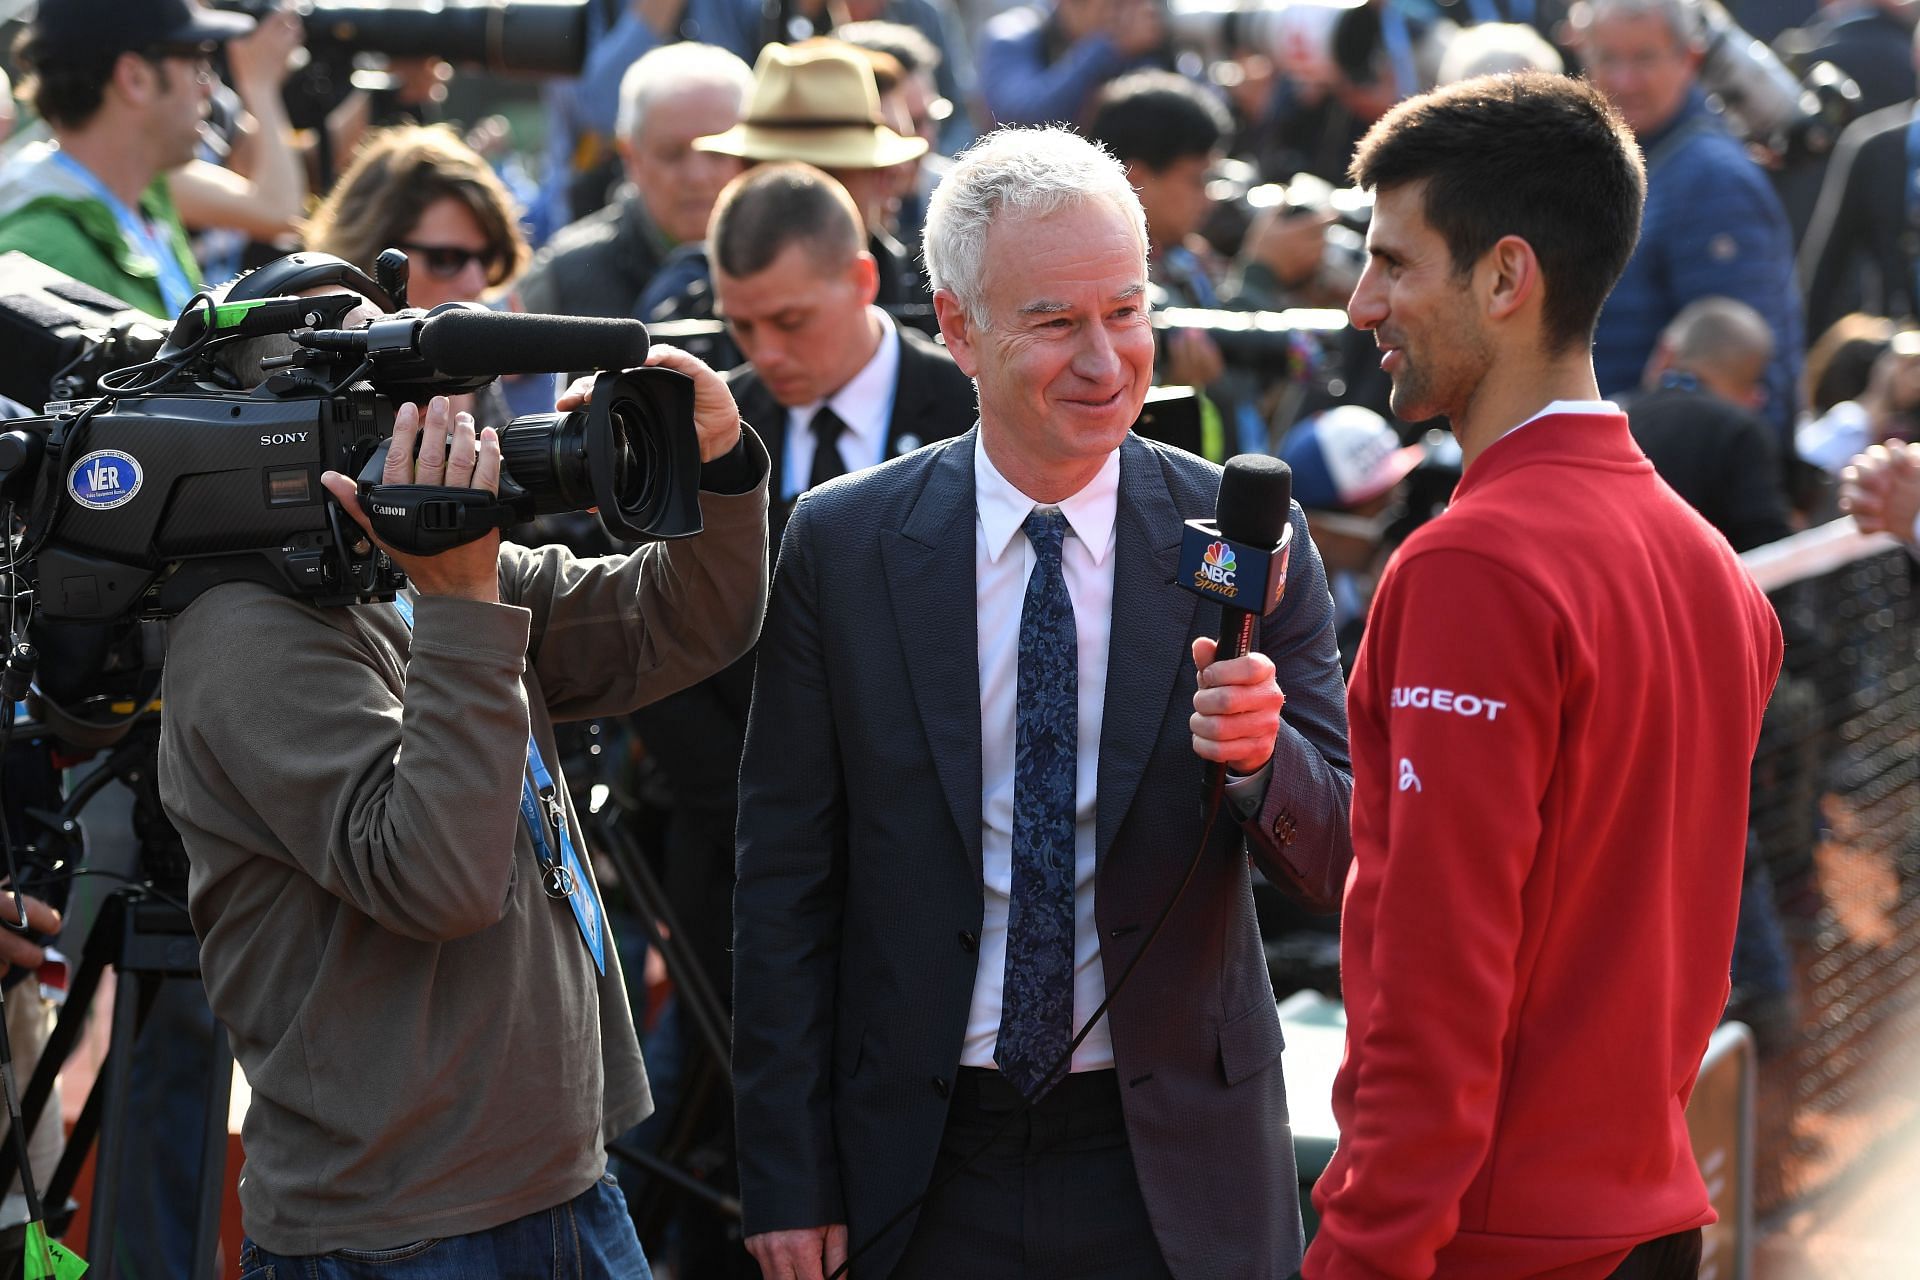 John McEnroe interviews Novak Djokovic at the 2016 French Open